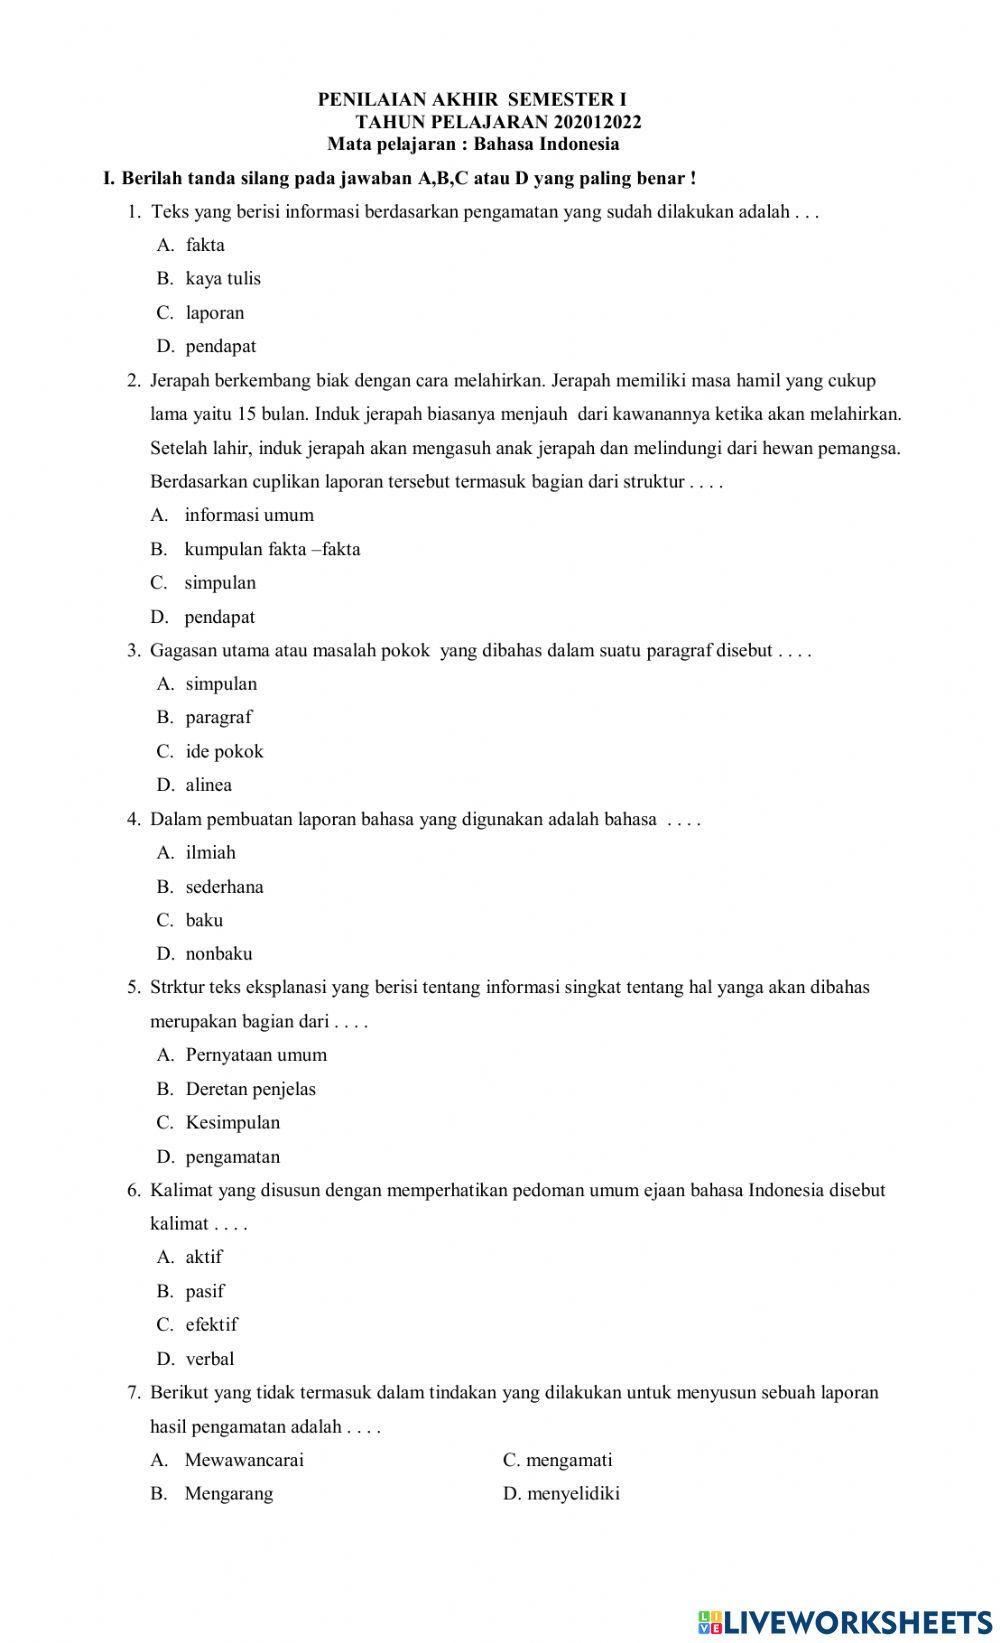 PAS Bahasa Indonesiia